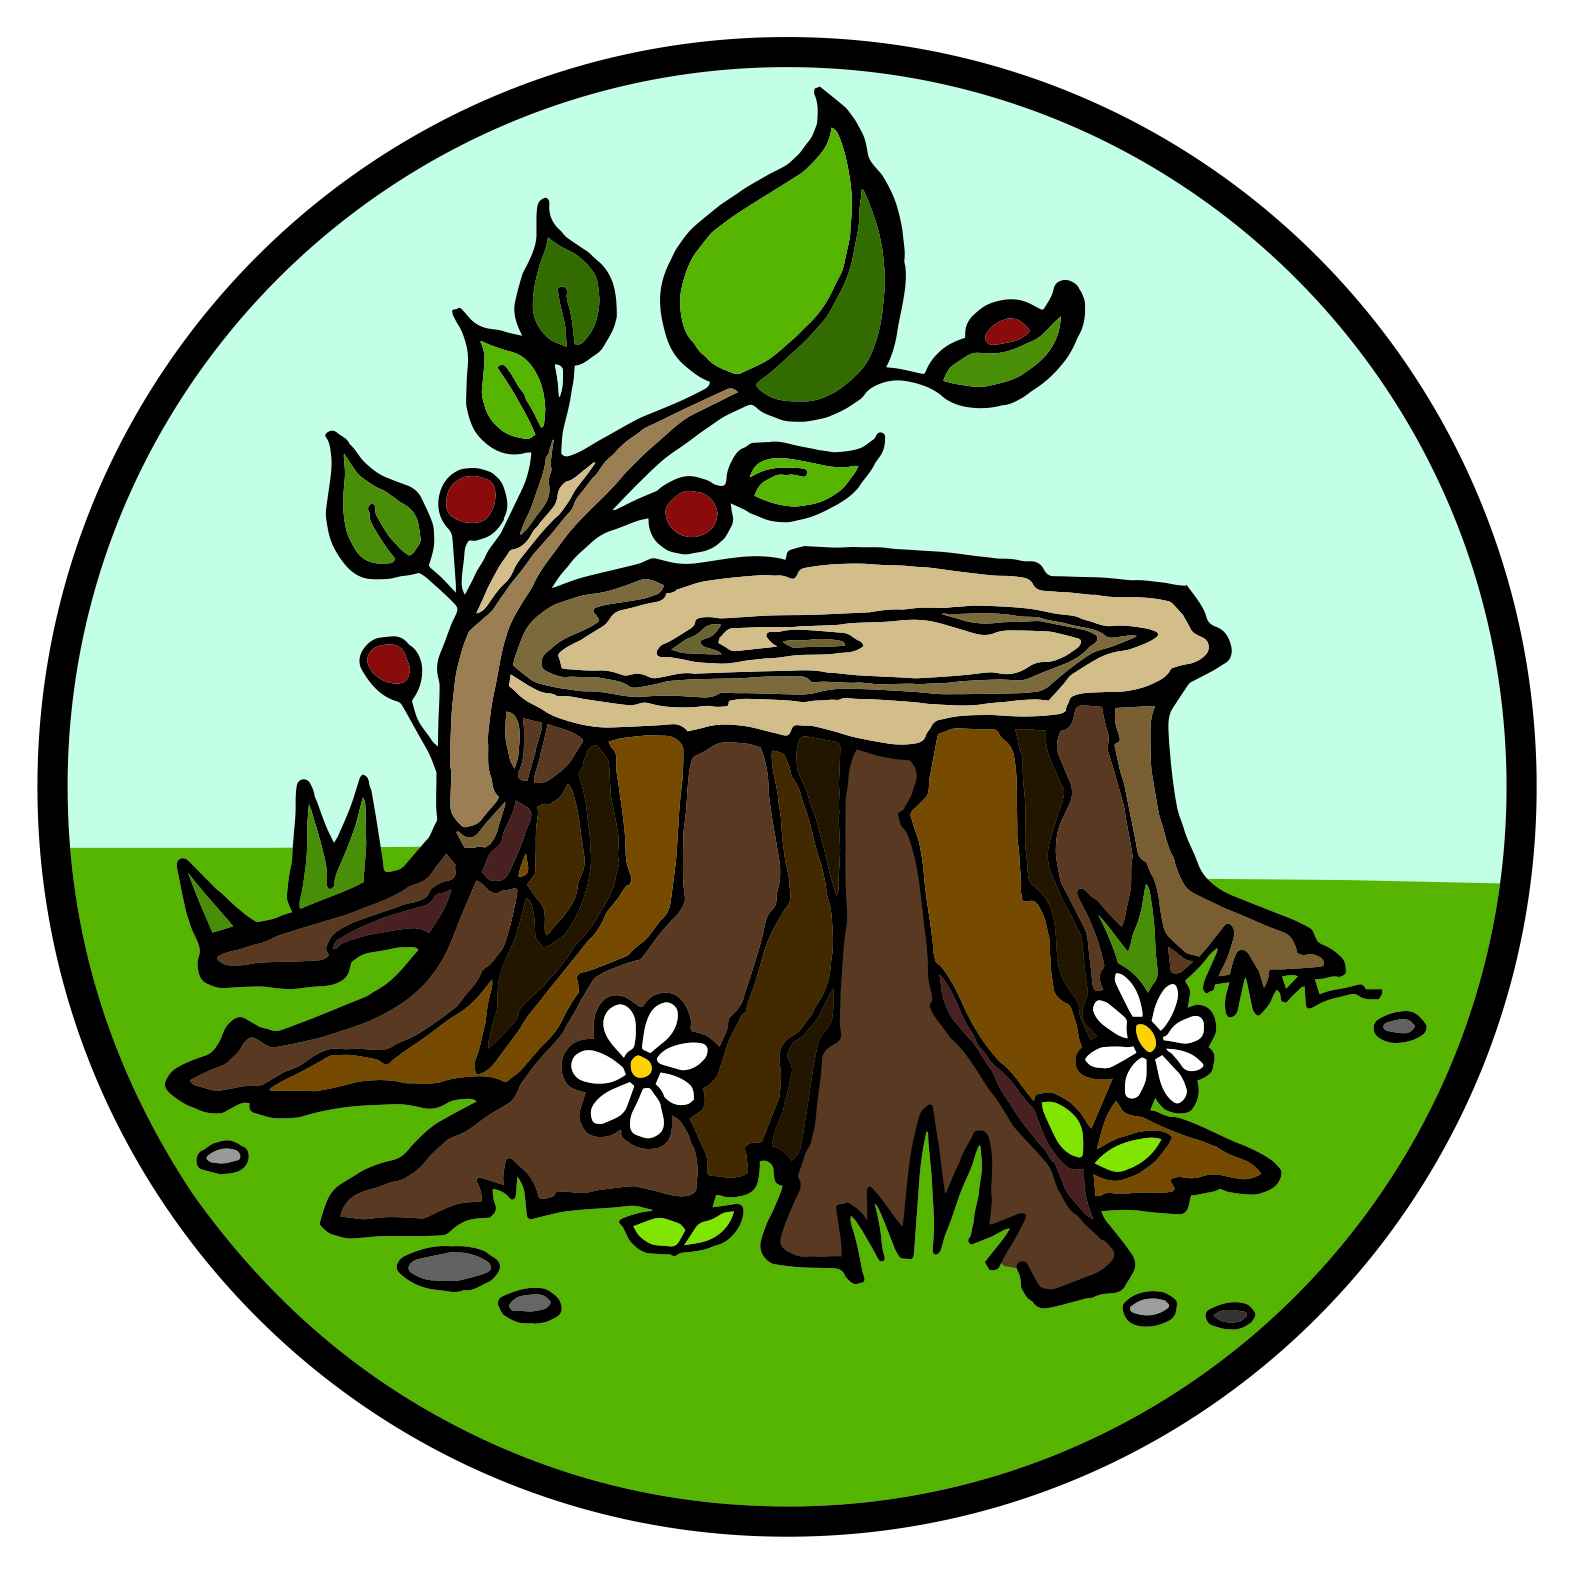 Tree stump with shoot Jesse Tree symbol